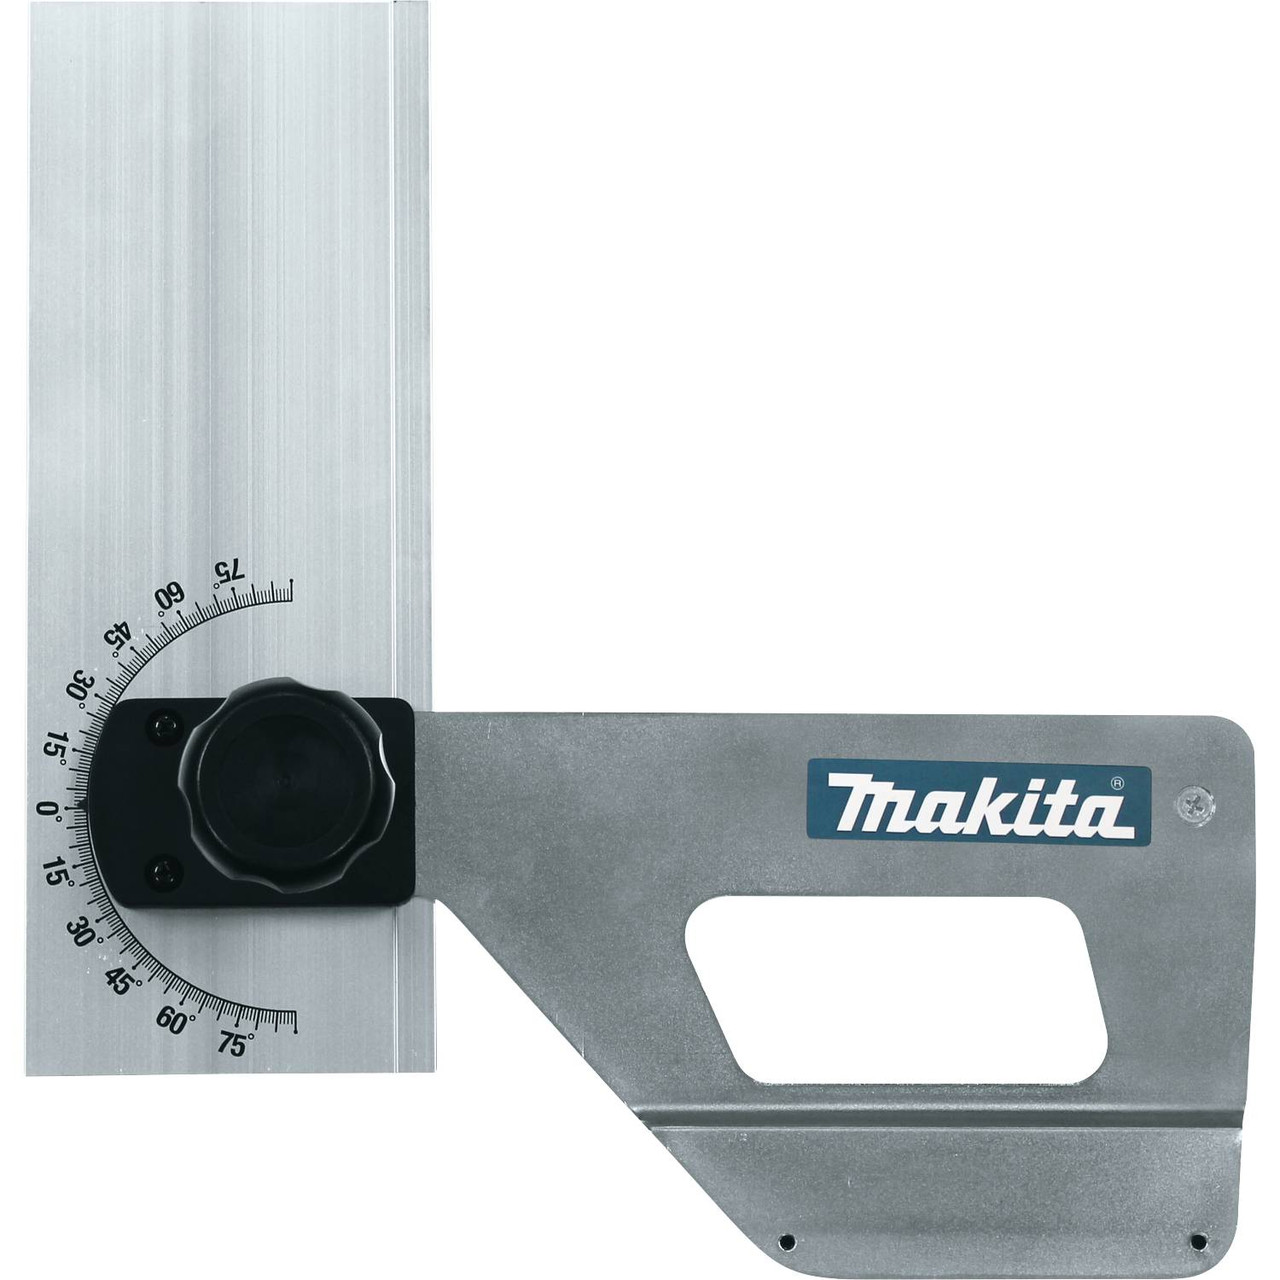 Makita MAK-191X79-7 MAKPAC Interlocking Organizer with Inserts